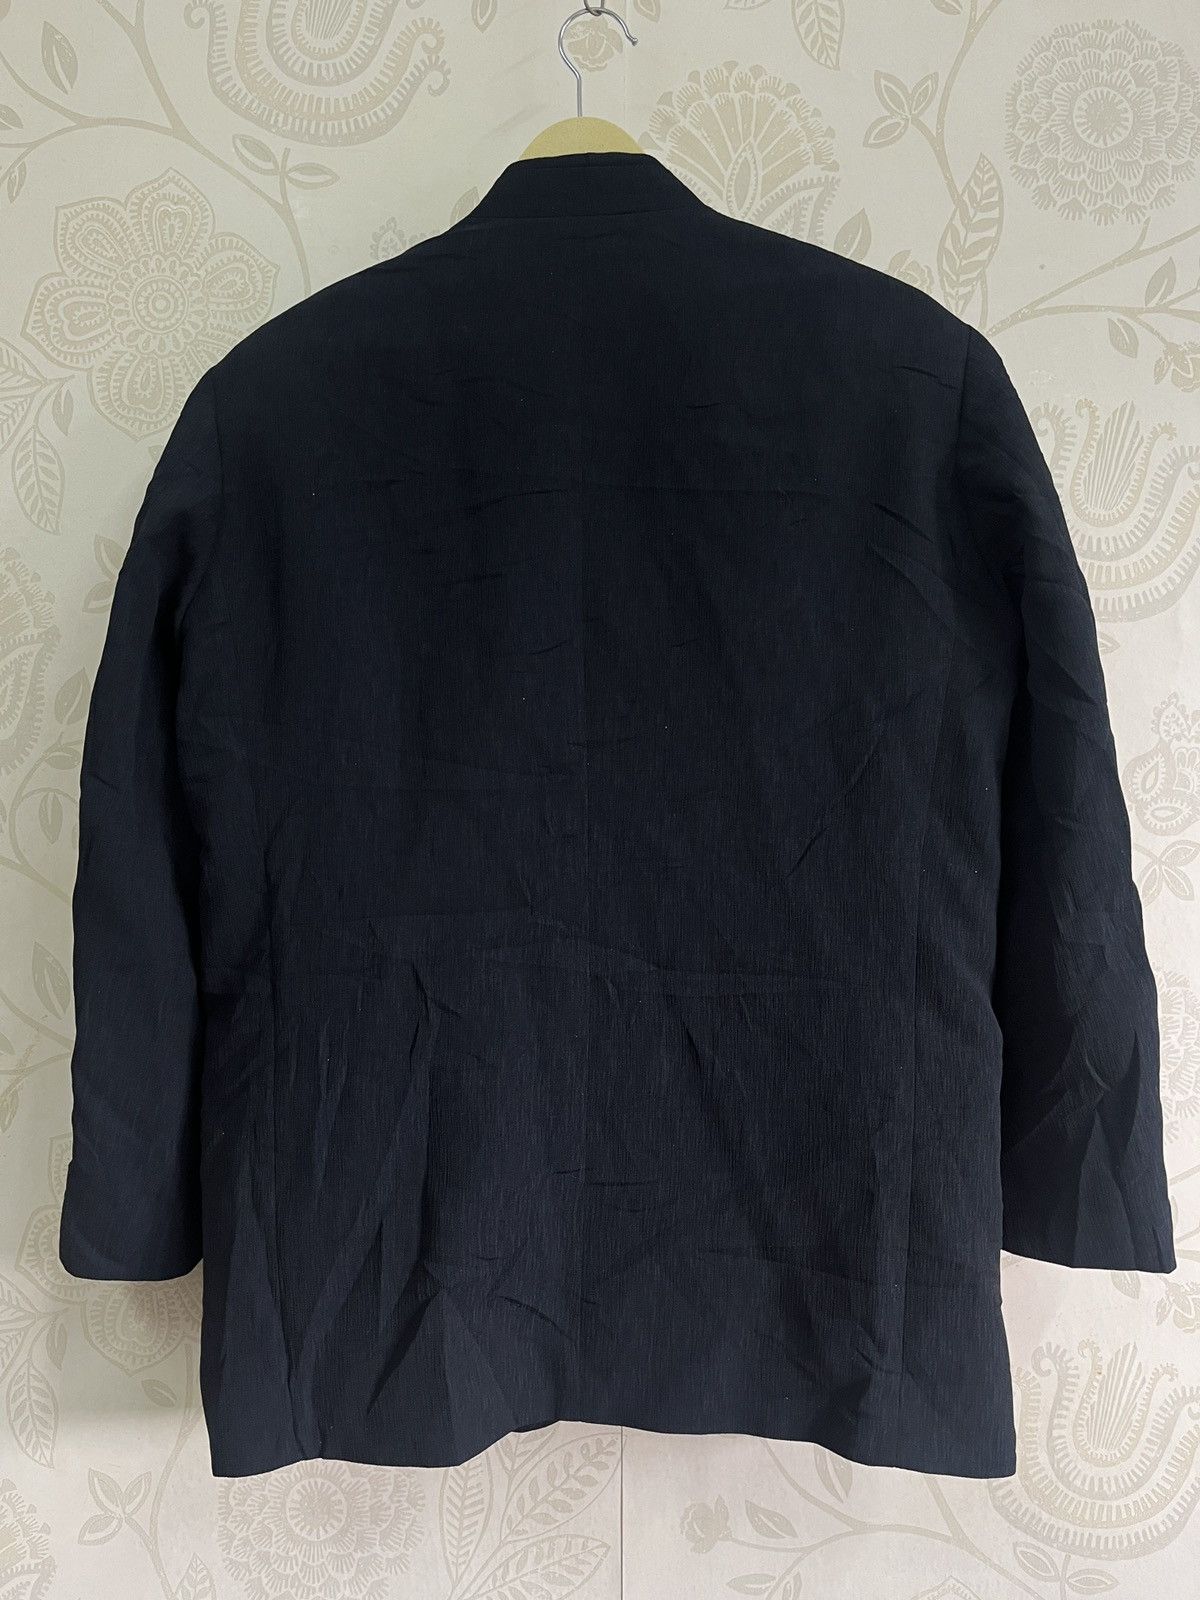 Grails Vintage Kapitalist Blazer Coat Jacket - 2